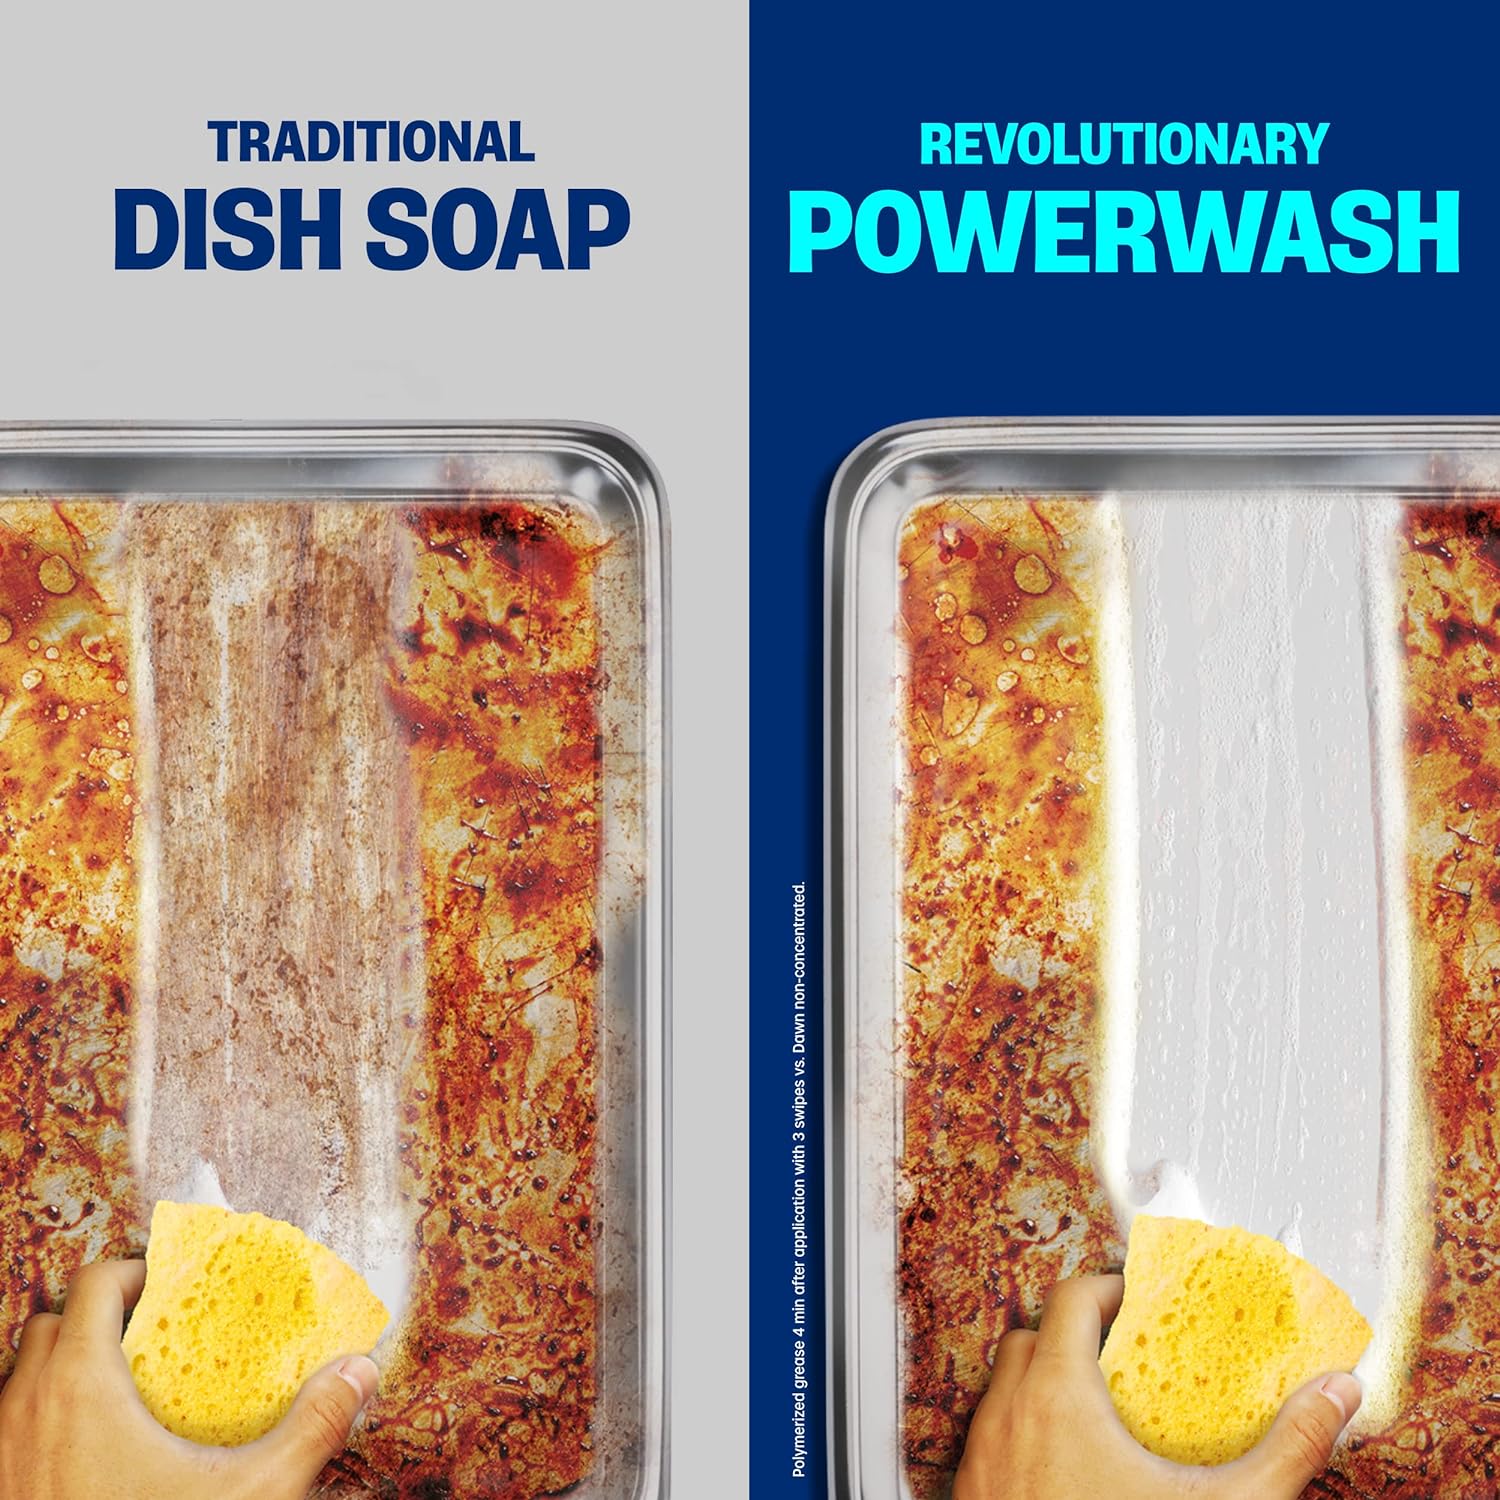 Dawn Powerwash Gain Original Dish Spray, Liquid Dish Soap 1 Starter Kit + 3 Refills, 64 Fl Oz : Health & Household